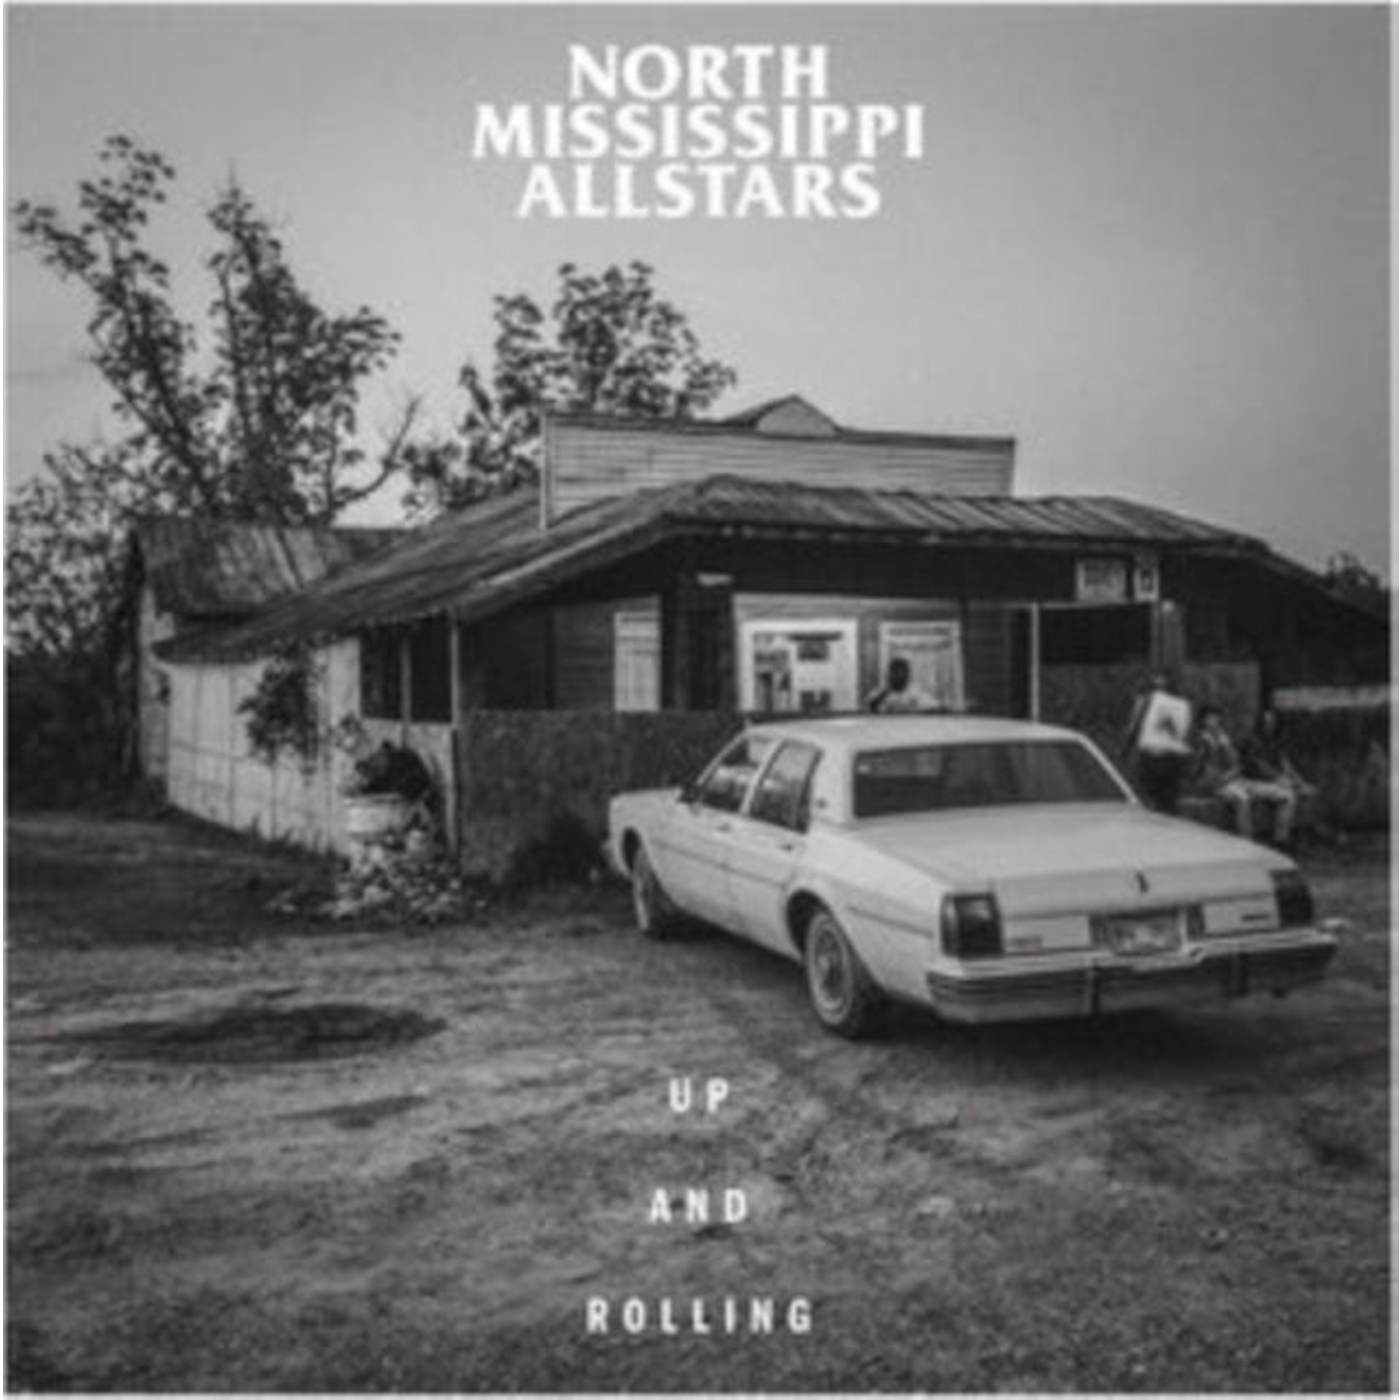 North Mississippi Allstars LP Vinyl Record - Up And Rolling (Sea Glass/Smoke Vinyl)